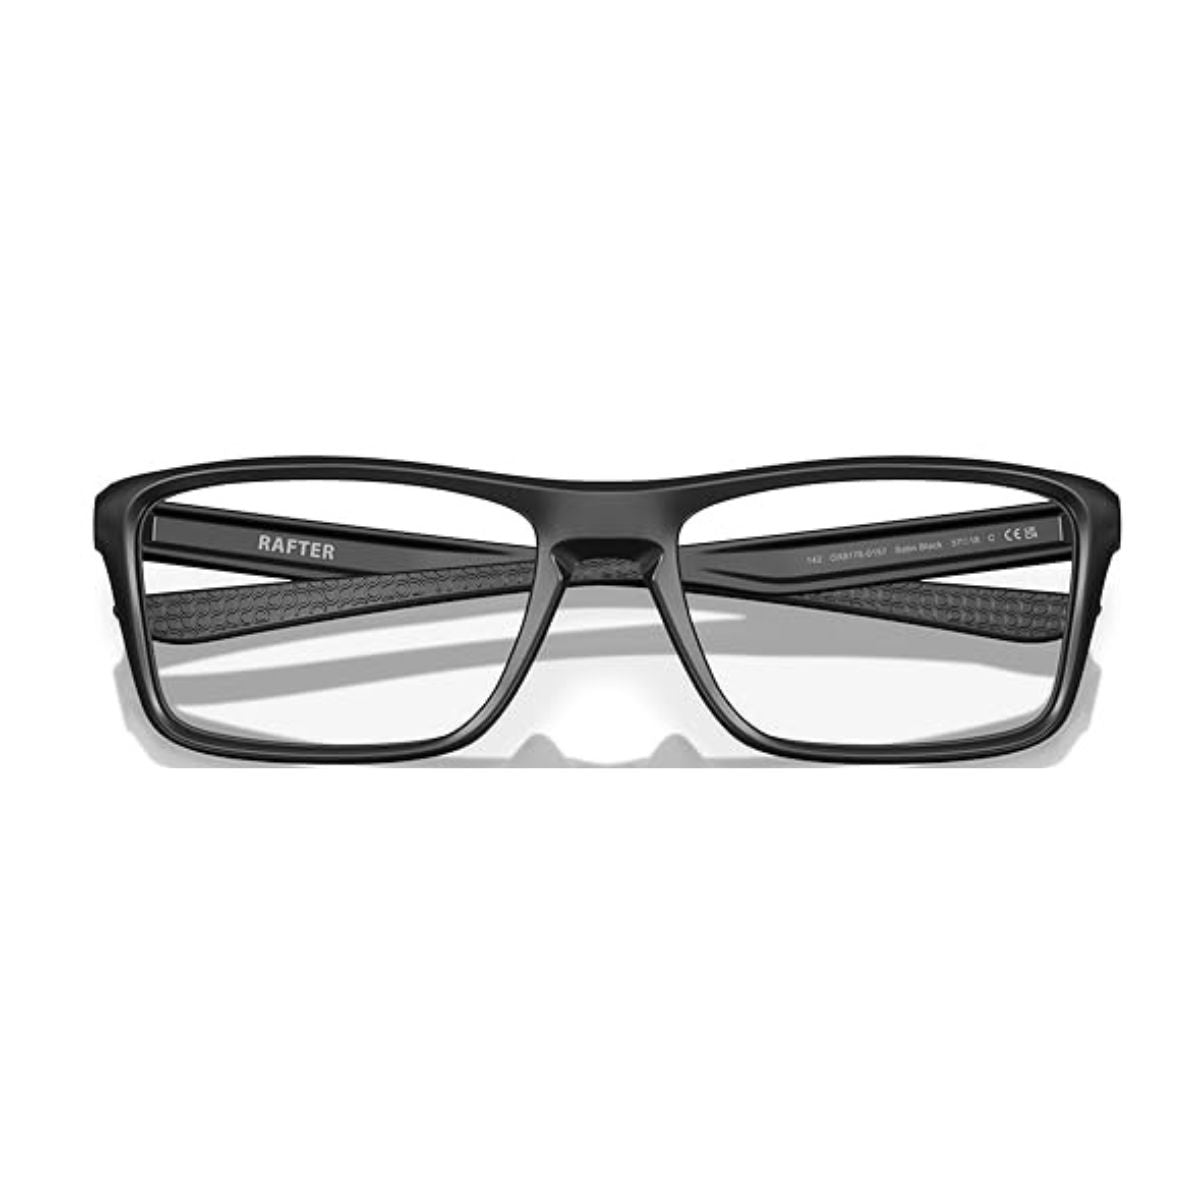 "Oakley 8178 0155 prescription glasses frame for men's online at optorium"